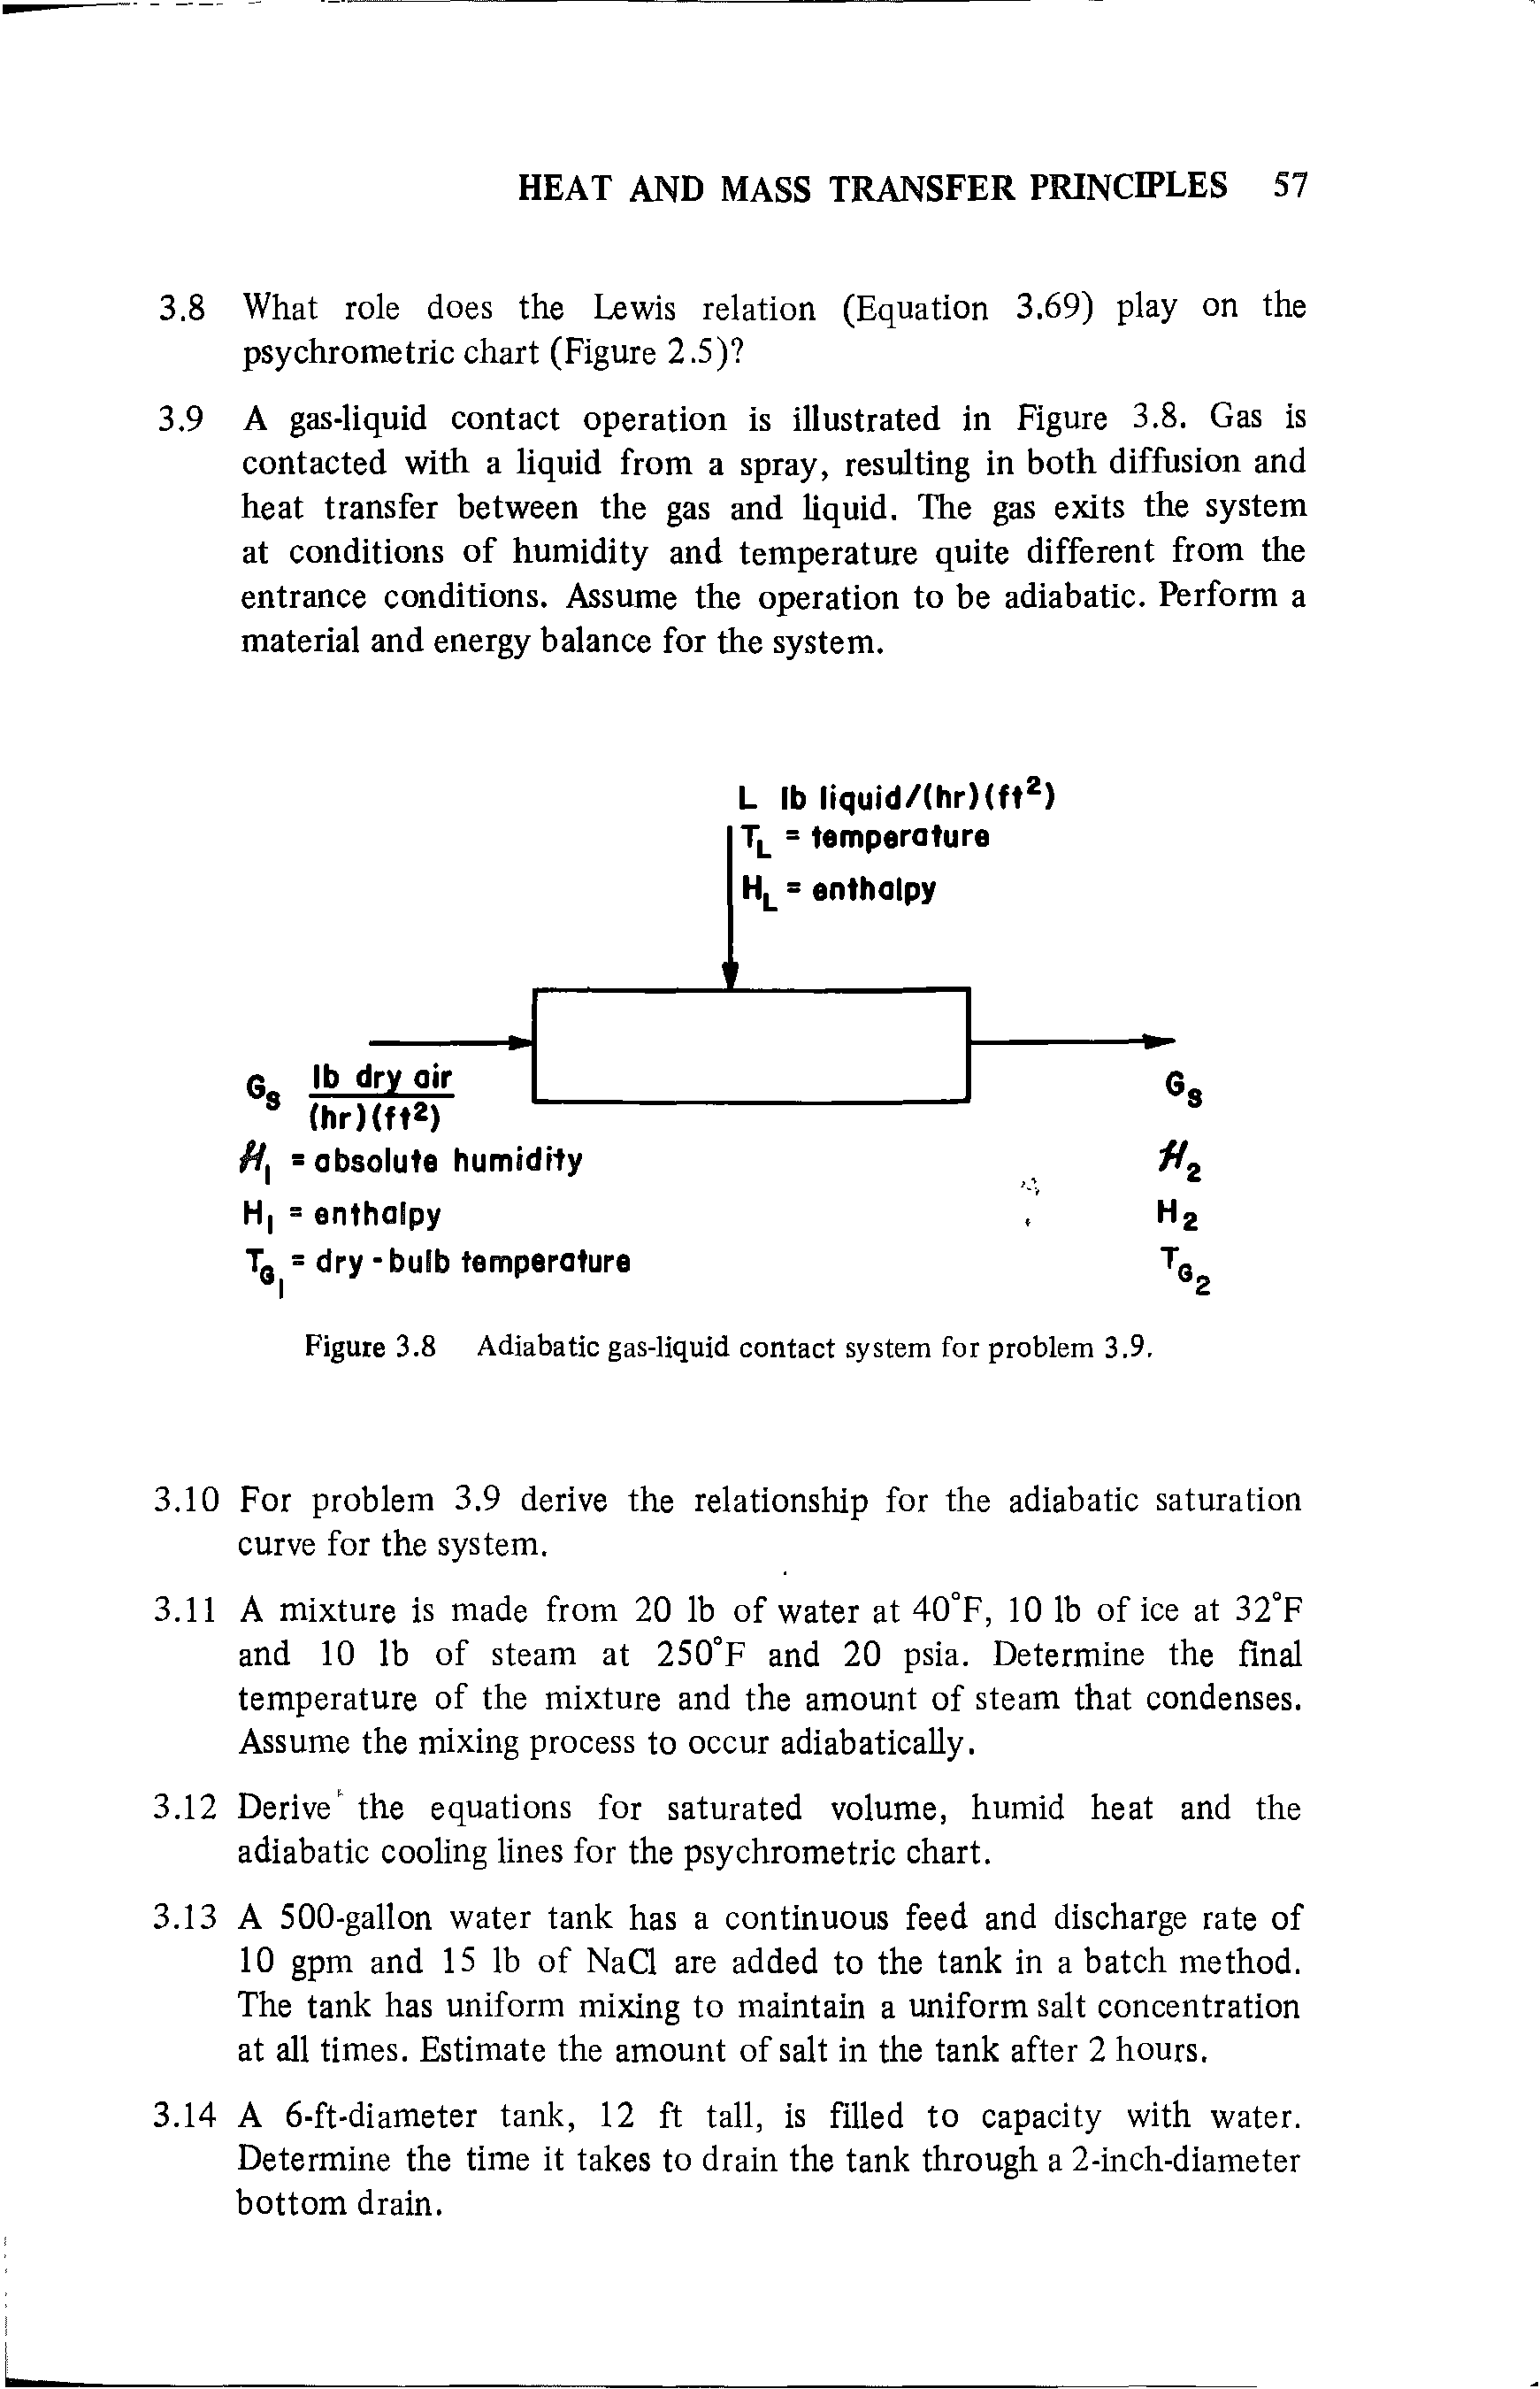 Figure 3.8 Adiabatic gas-liquid contact system for problem 3.9.